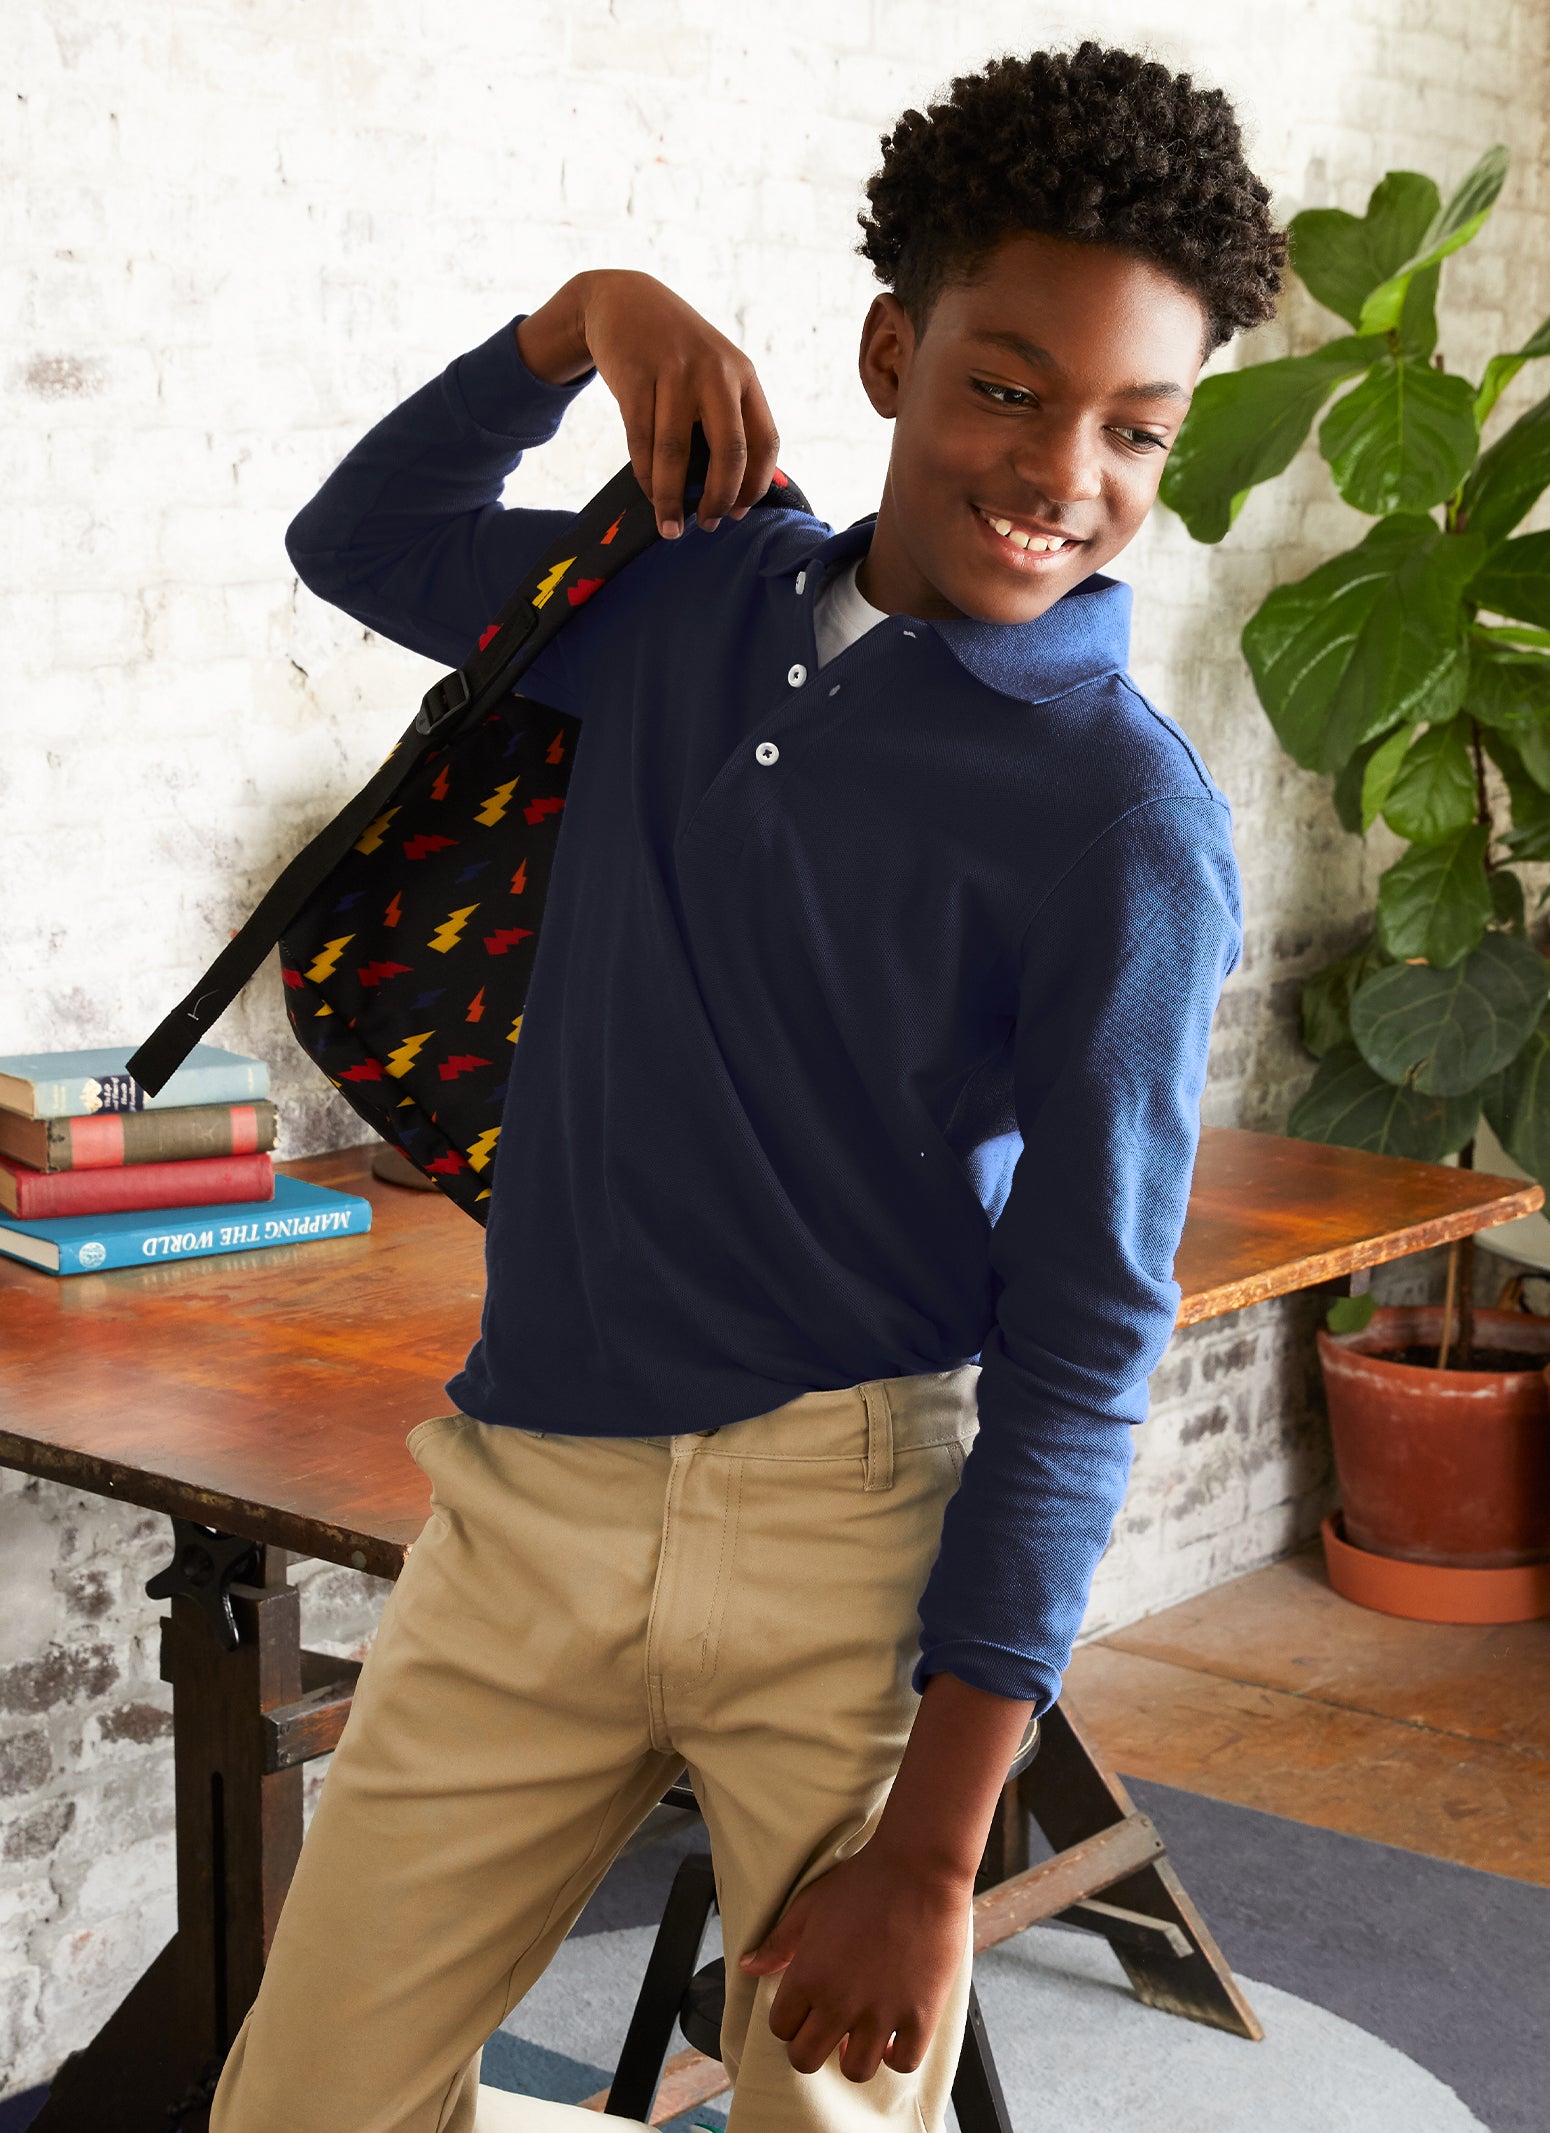 Clearance - School Apparel Boy's Regular+Husky Brown Pleated Short – A+  School Uniforms & Sewing Center